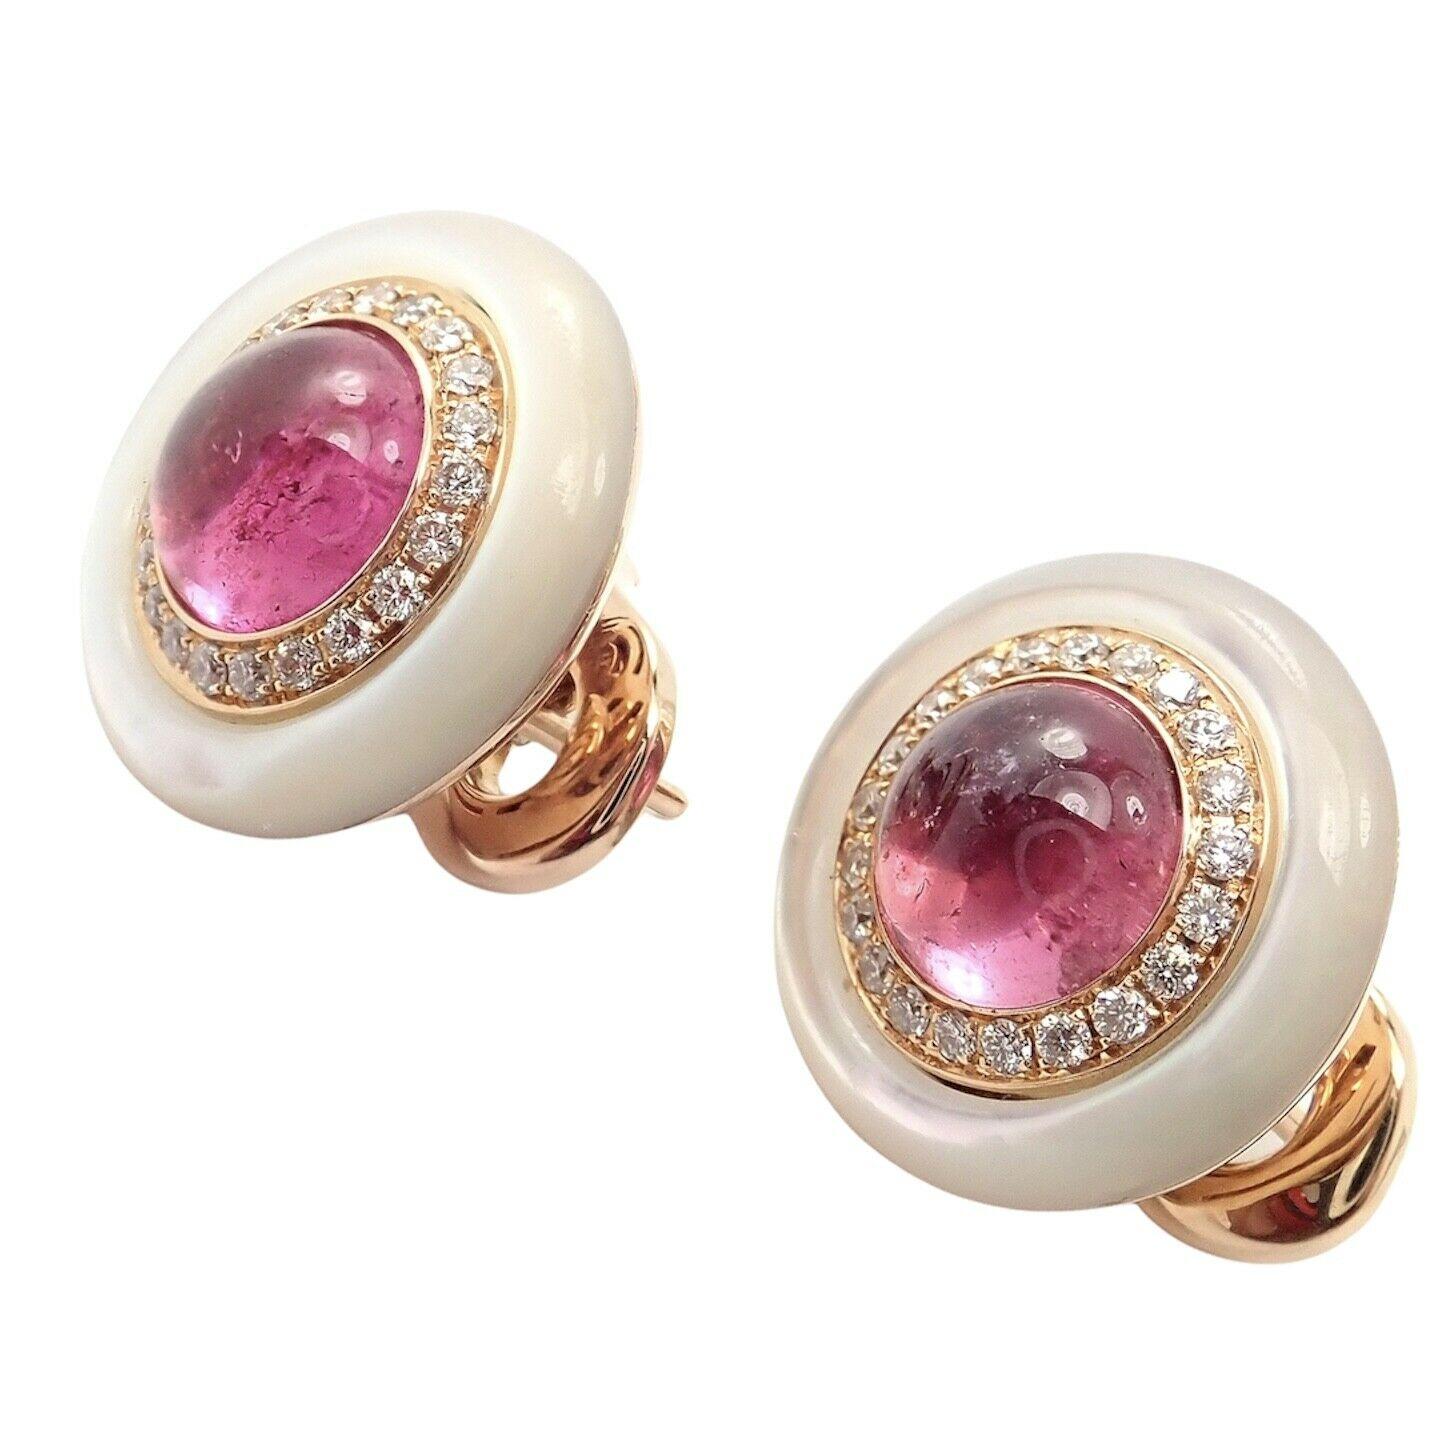 Brilliant Cut Vintage Bulgari Bvlgari Pink Tourmaline Diamond Mother of Pearl Gold Earrings